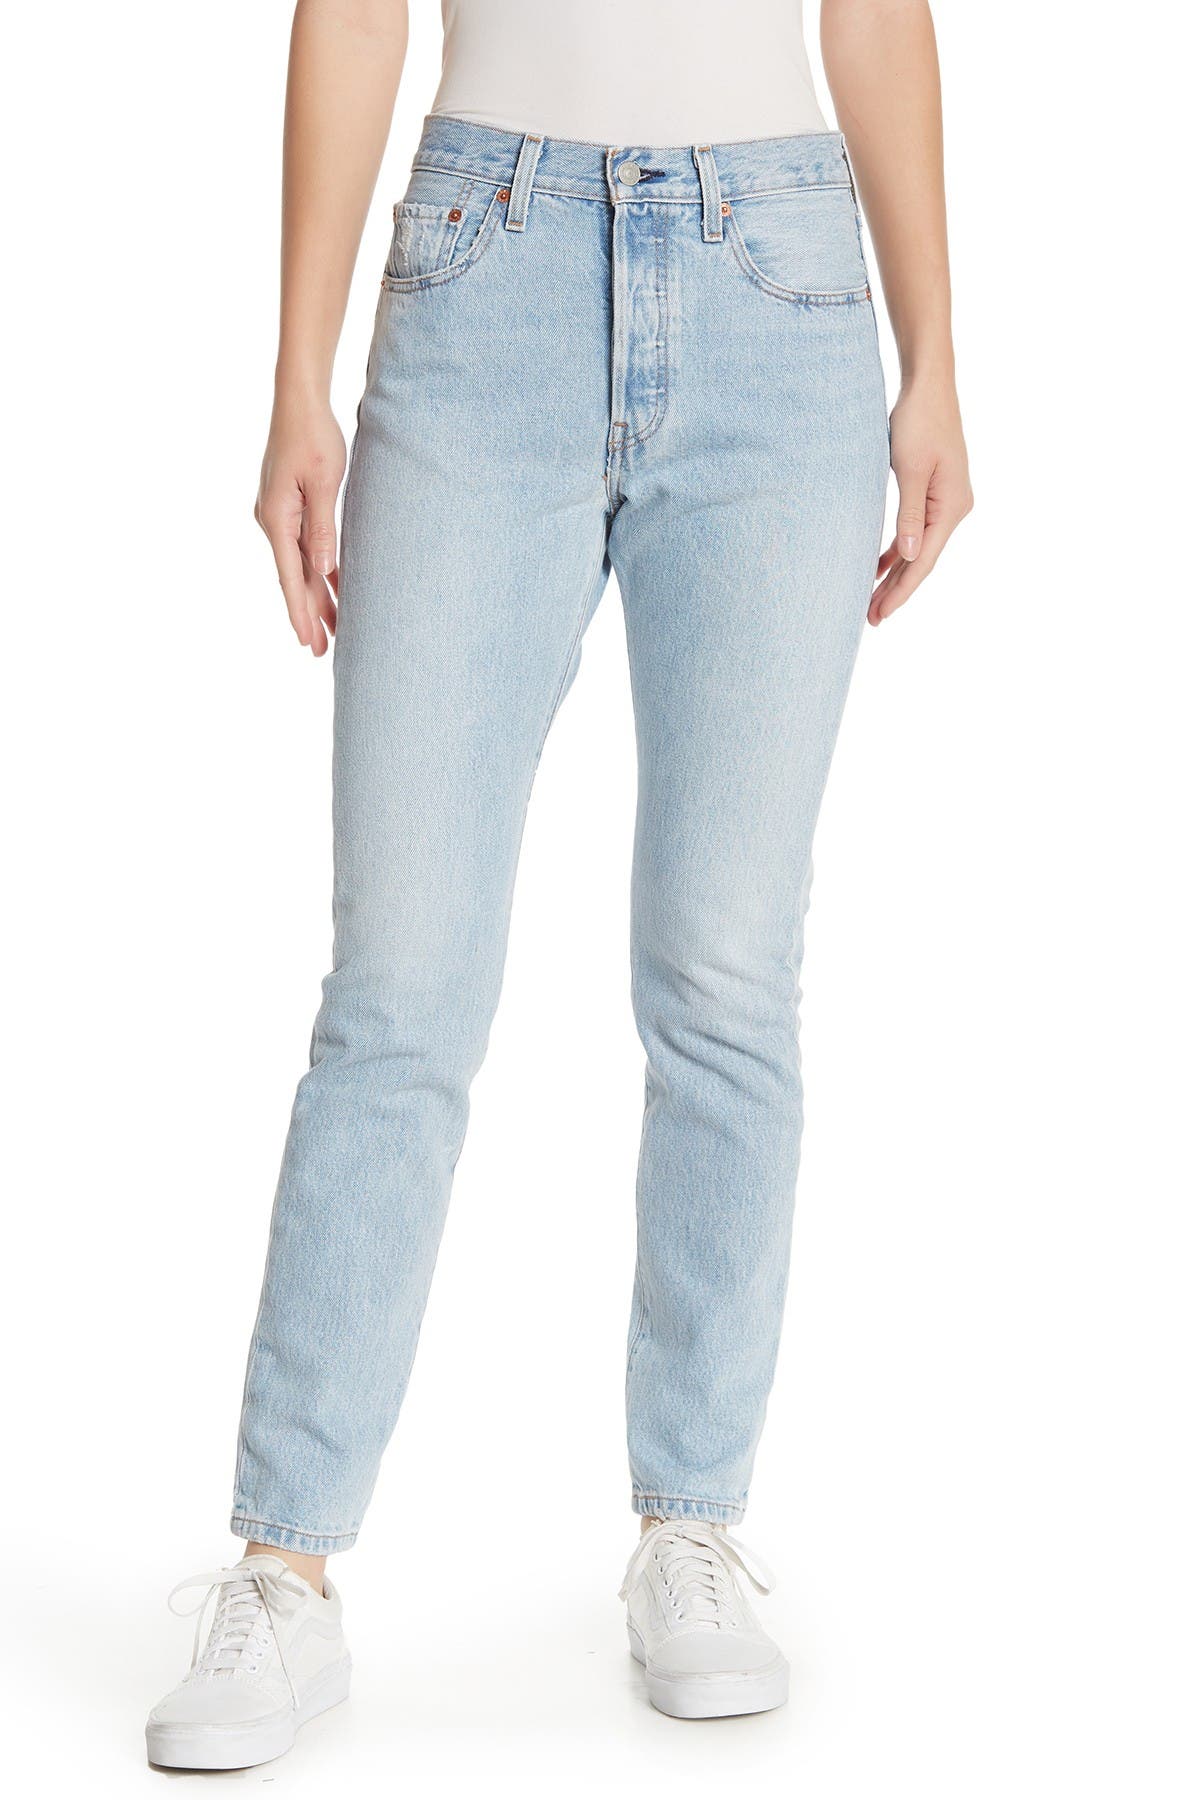 levi's 501 skinny jeans lovefool